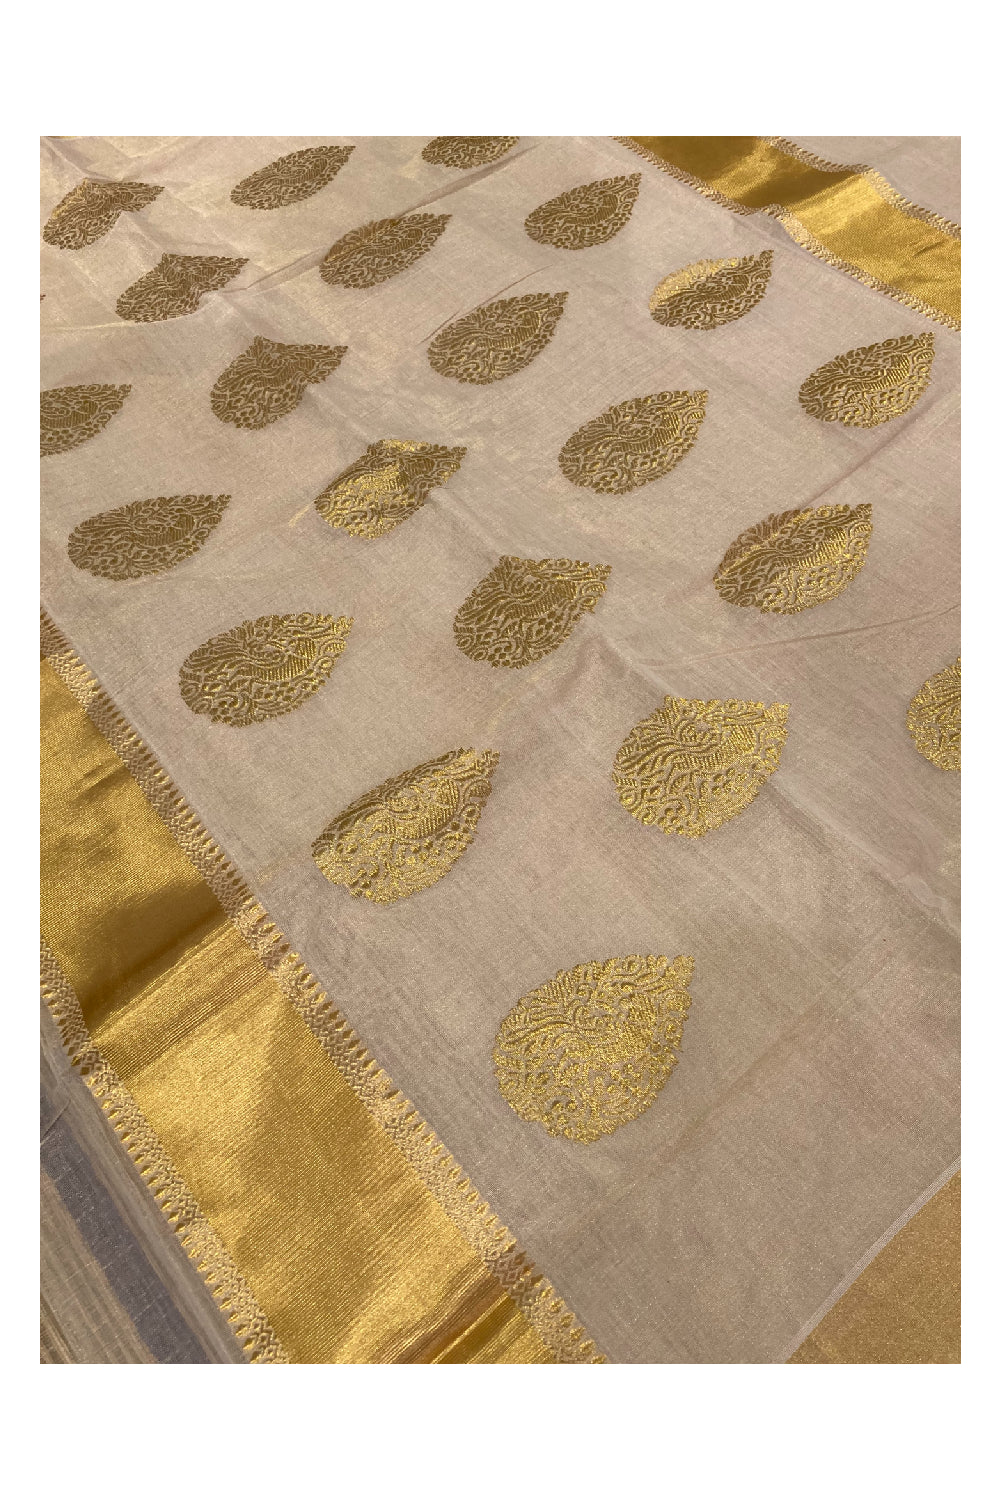 Southloom Balaramapuram Handloom Tissue Heavy Work Saree with Woven Motifs Design